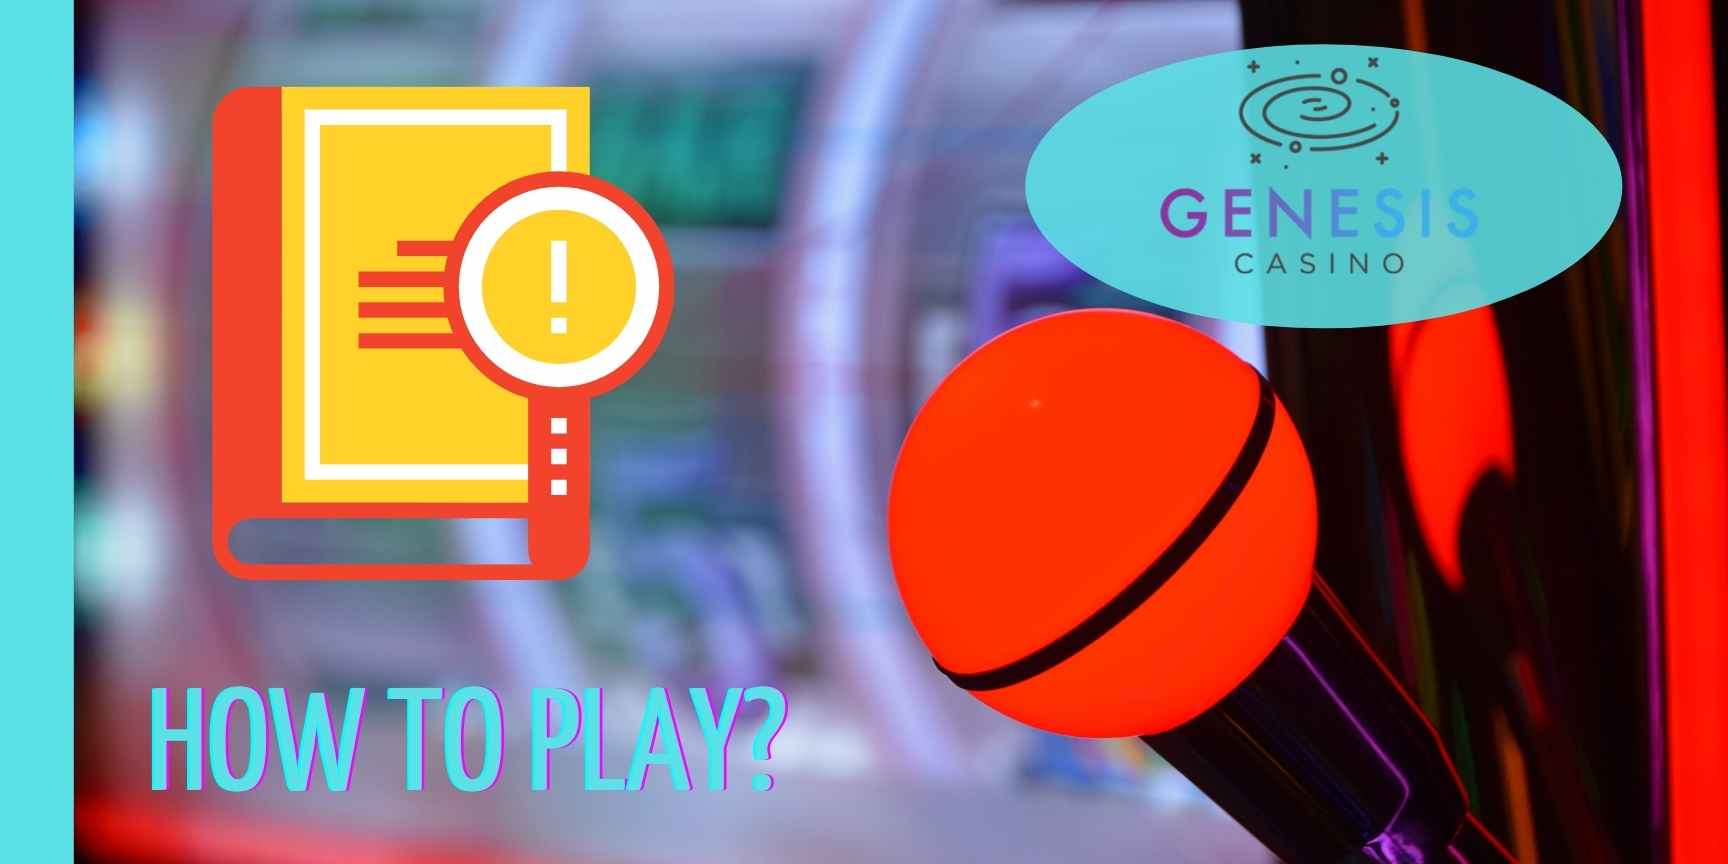 how to play Genesis Casino?